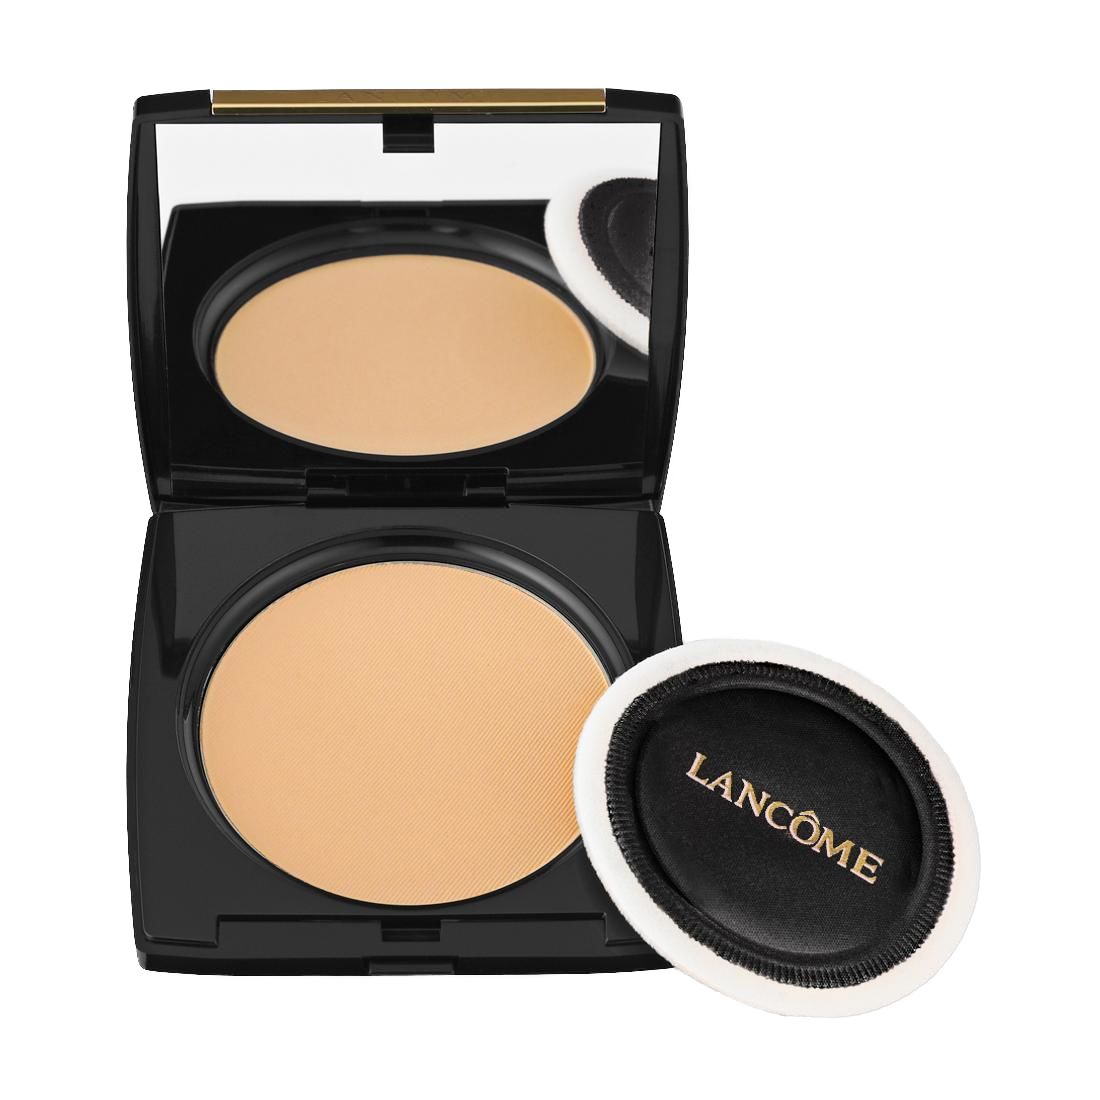 Dual Finish Versatile Powder Foundation Makeup by Lancome | Lancome (US)